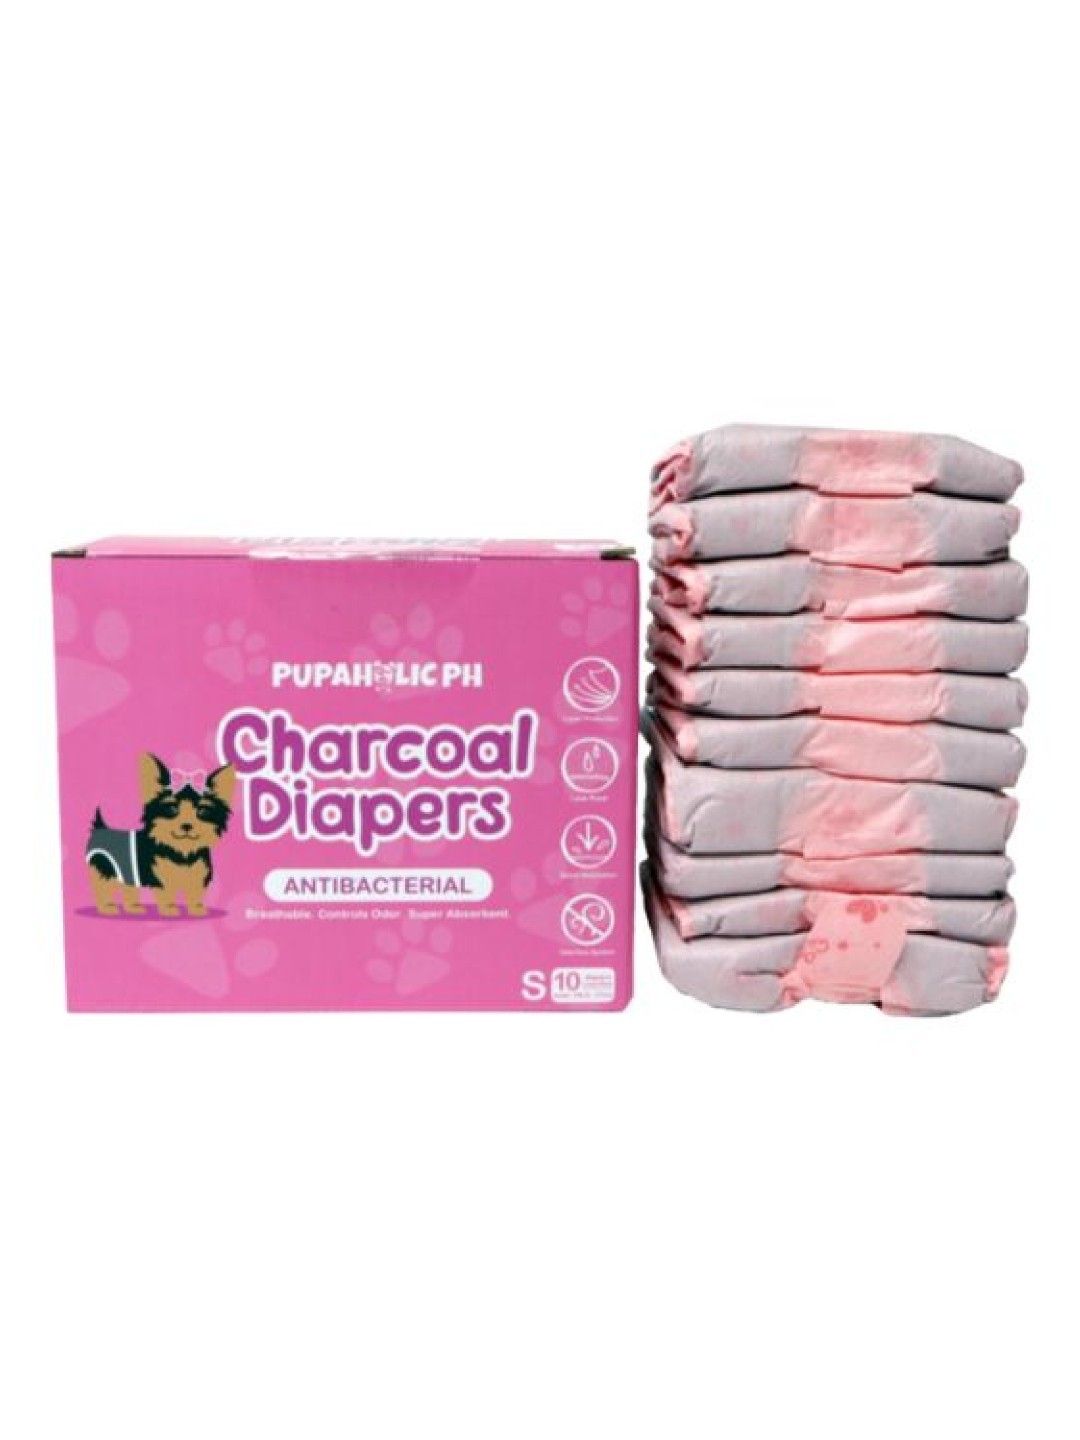 Pupaholic PH 1 Box of Charcoal Diaper 10Pcs/Box (Female) - Small